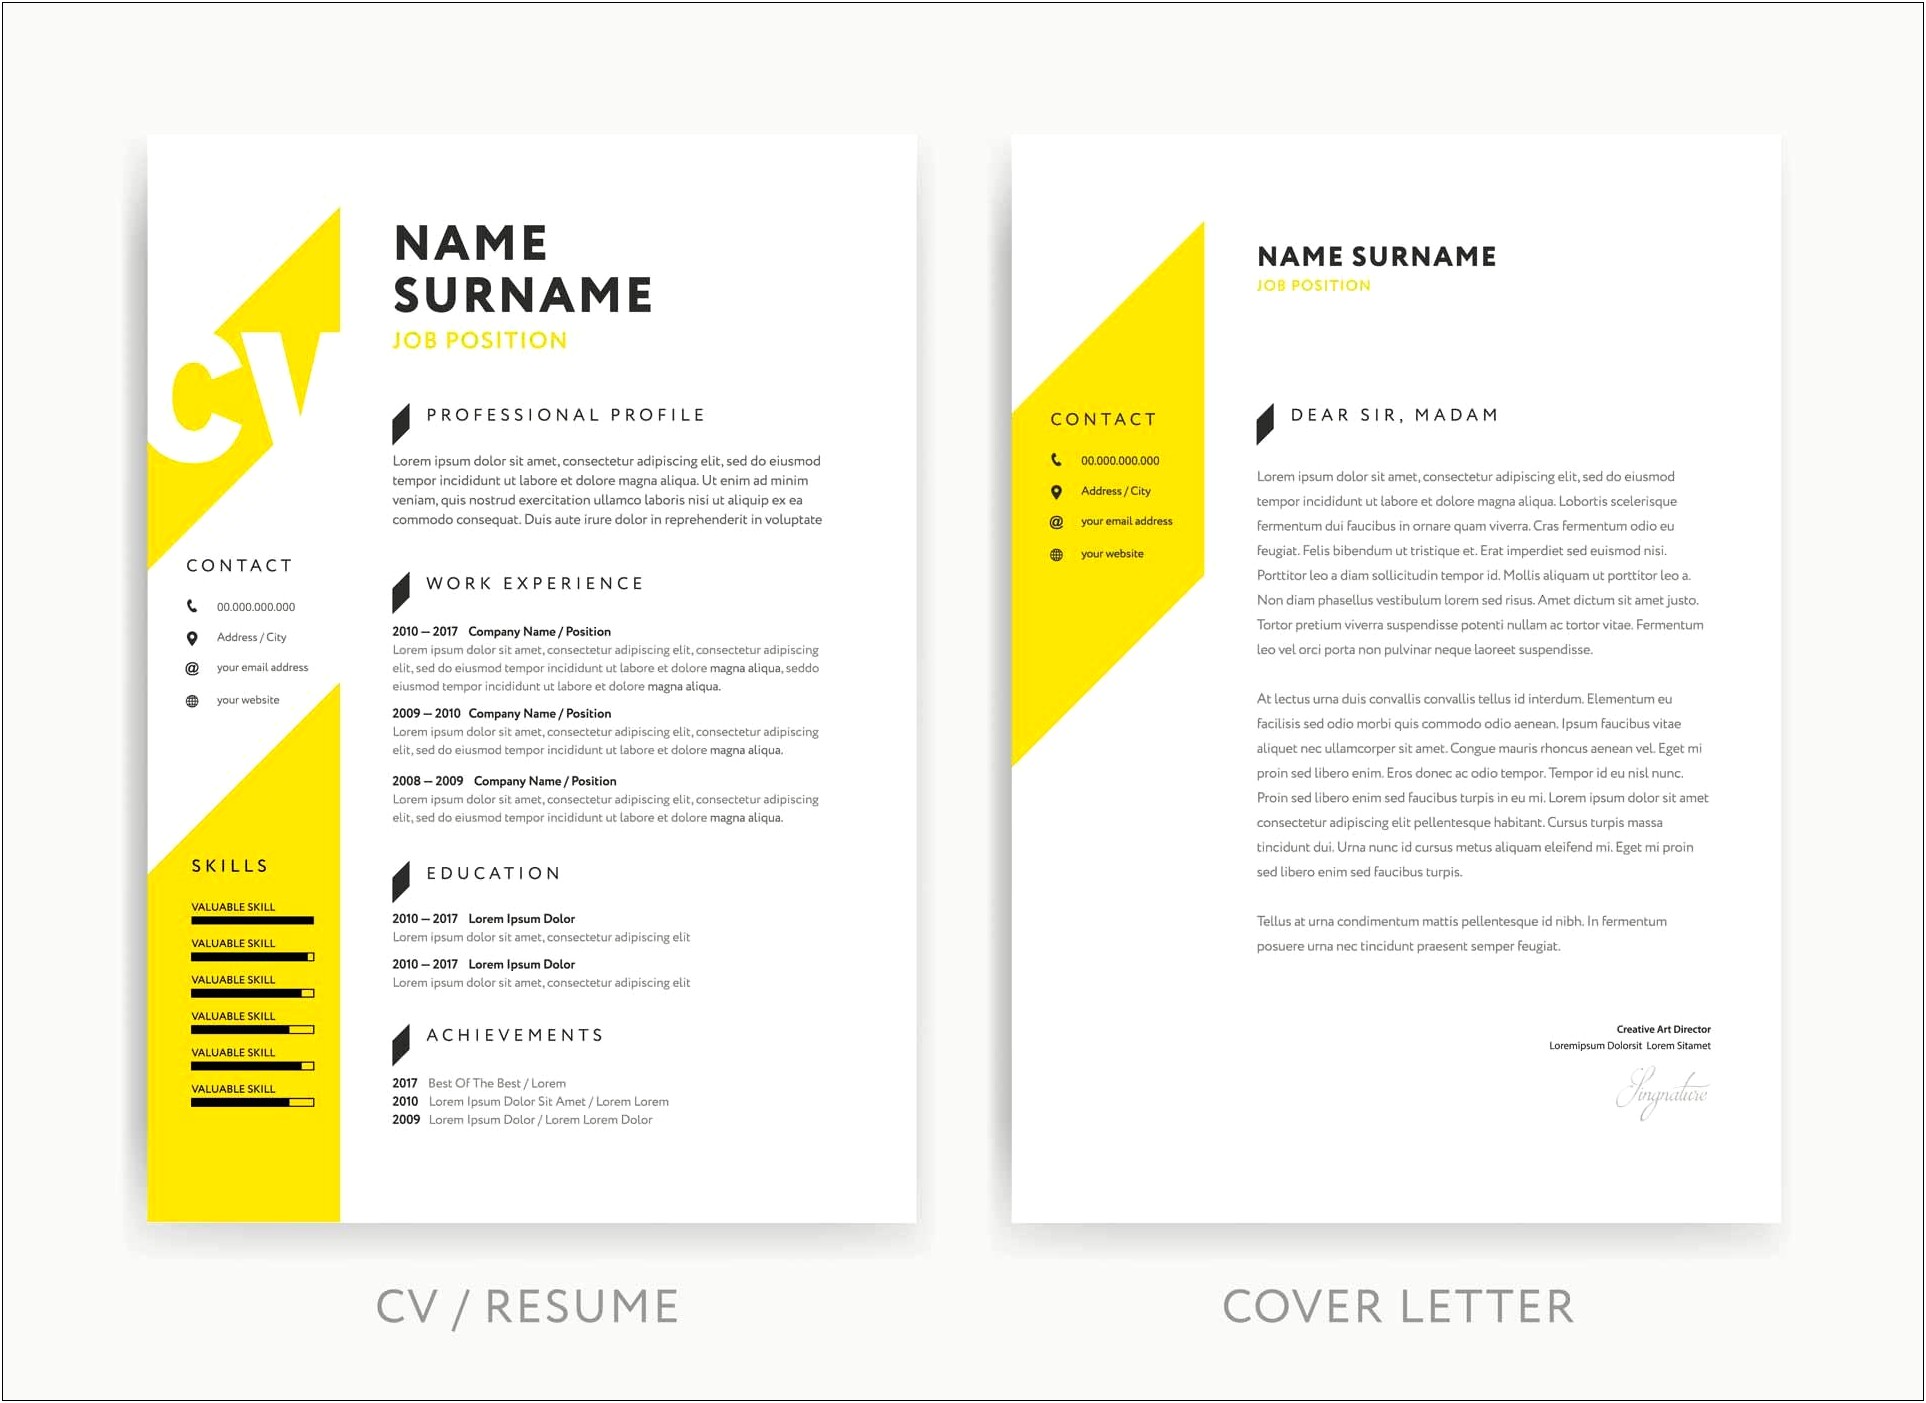 Sample Cover Letter For Resume Part Time Job